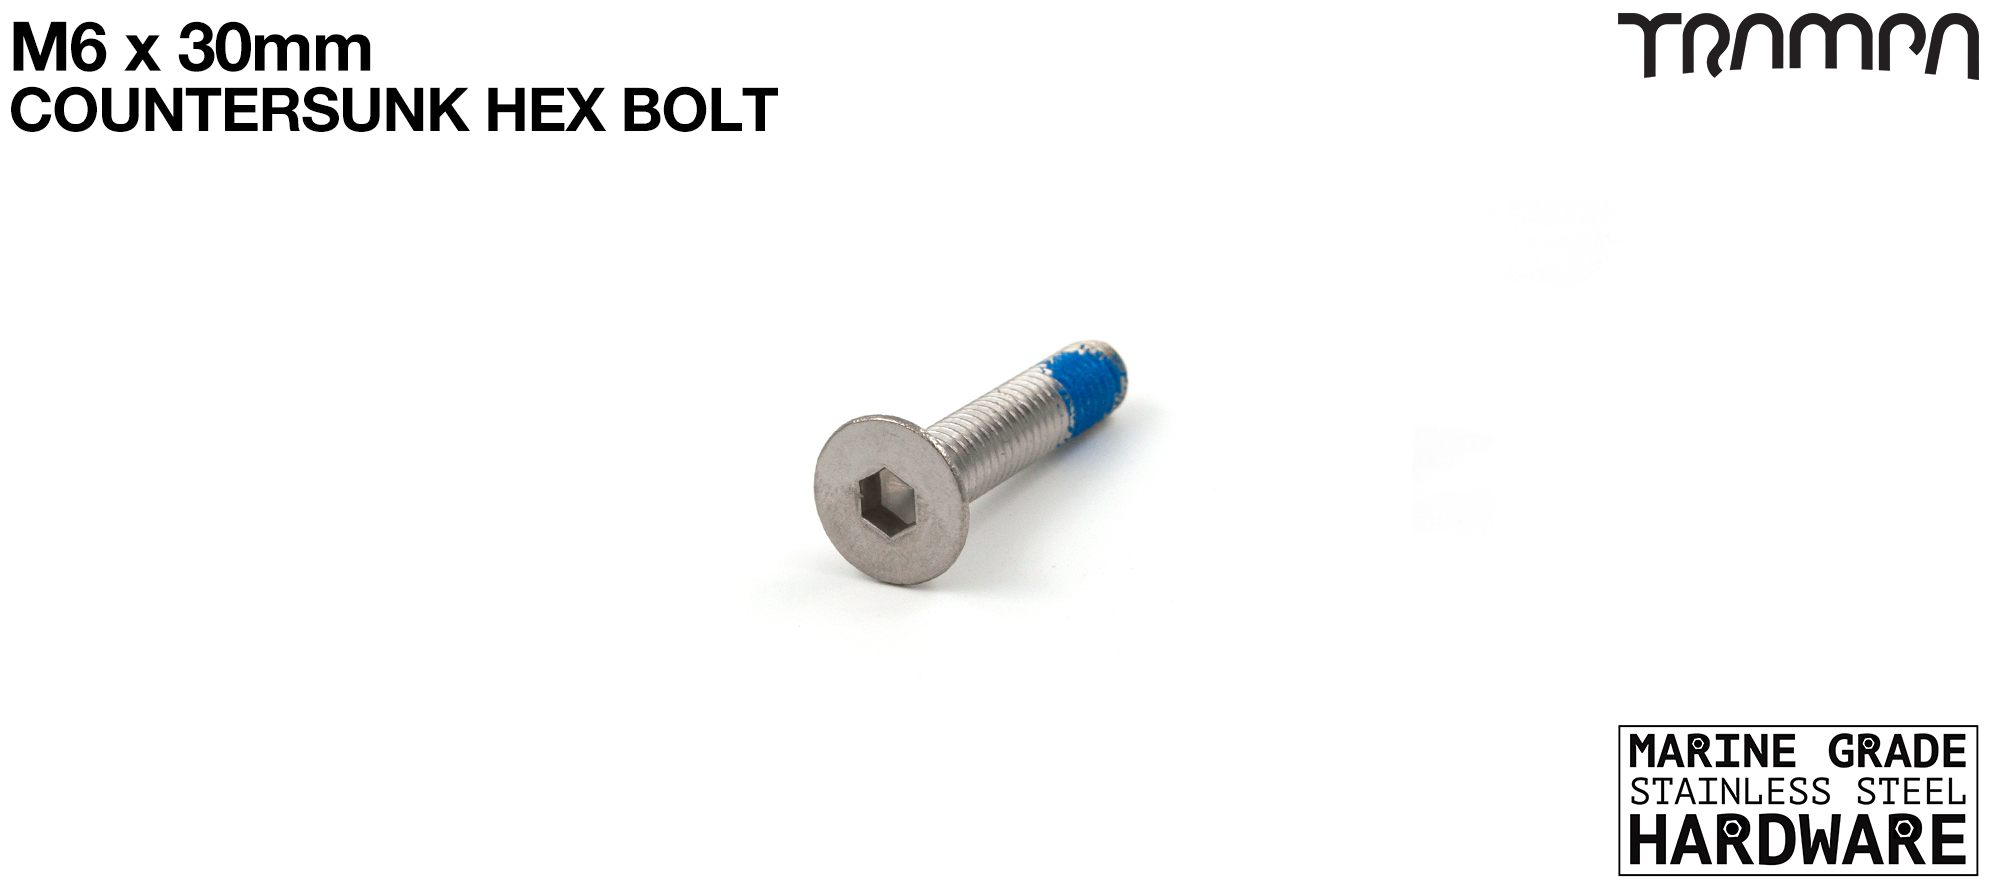 M6 x 30mm Countersunk Allen-Key Bolt - Marine Grade Stainless steel with locking paste